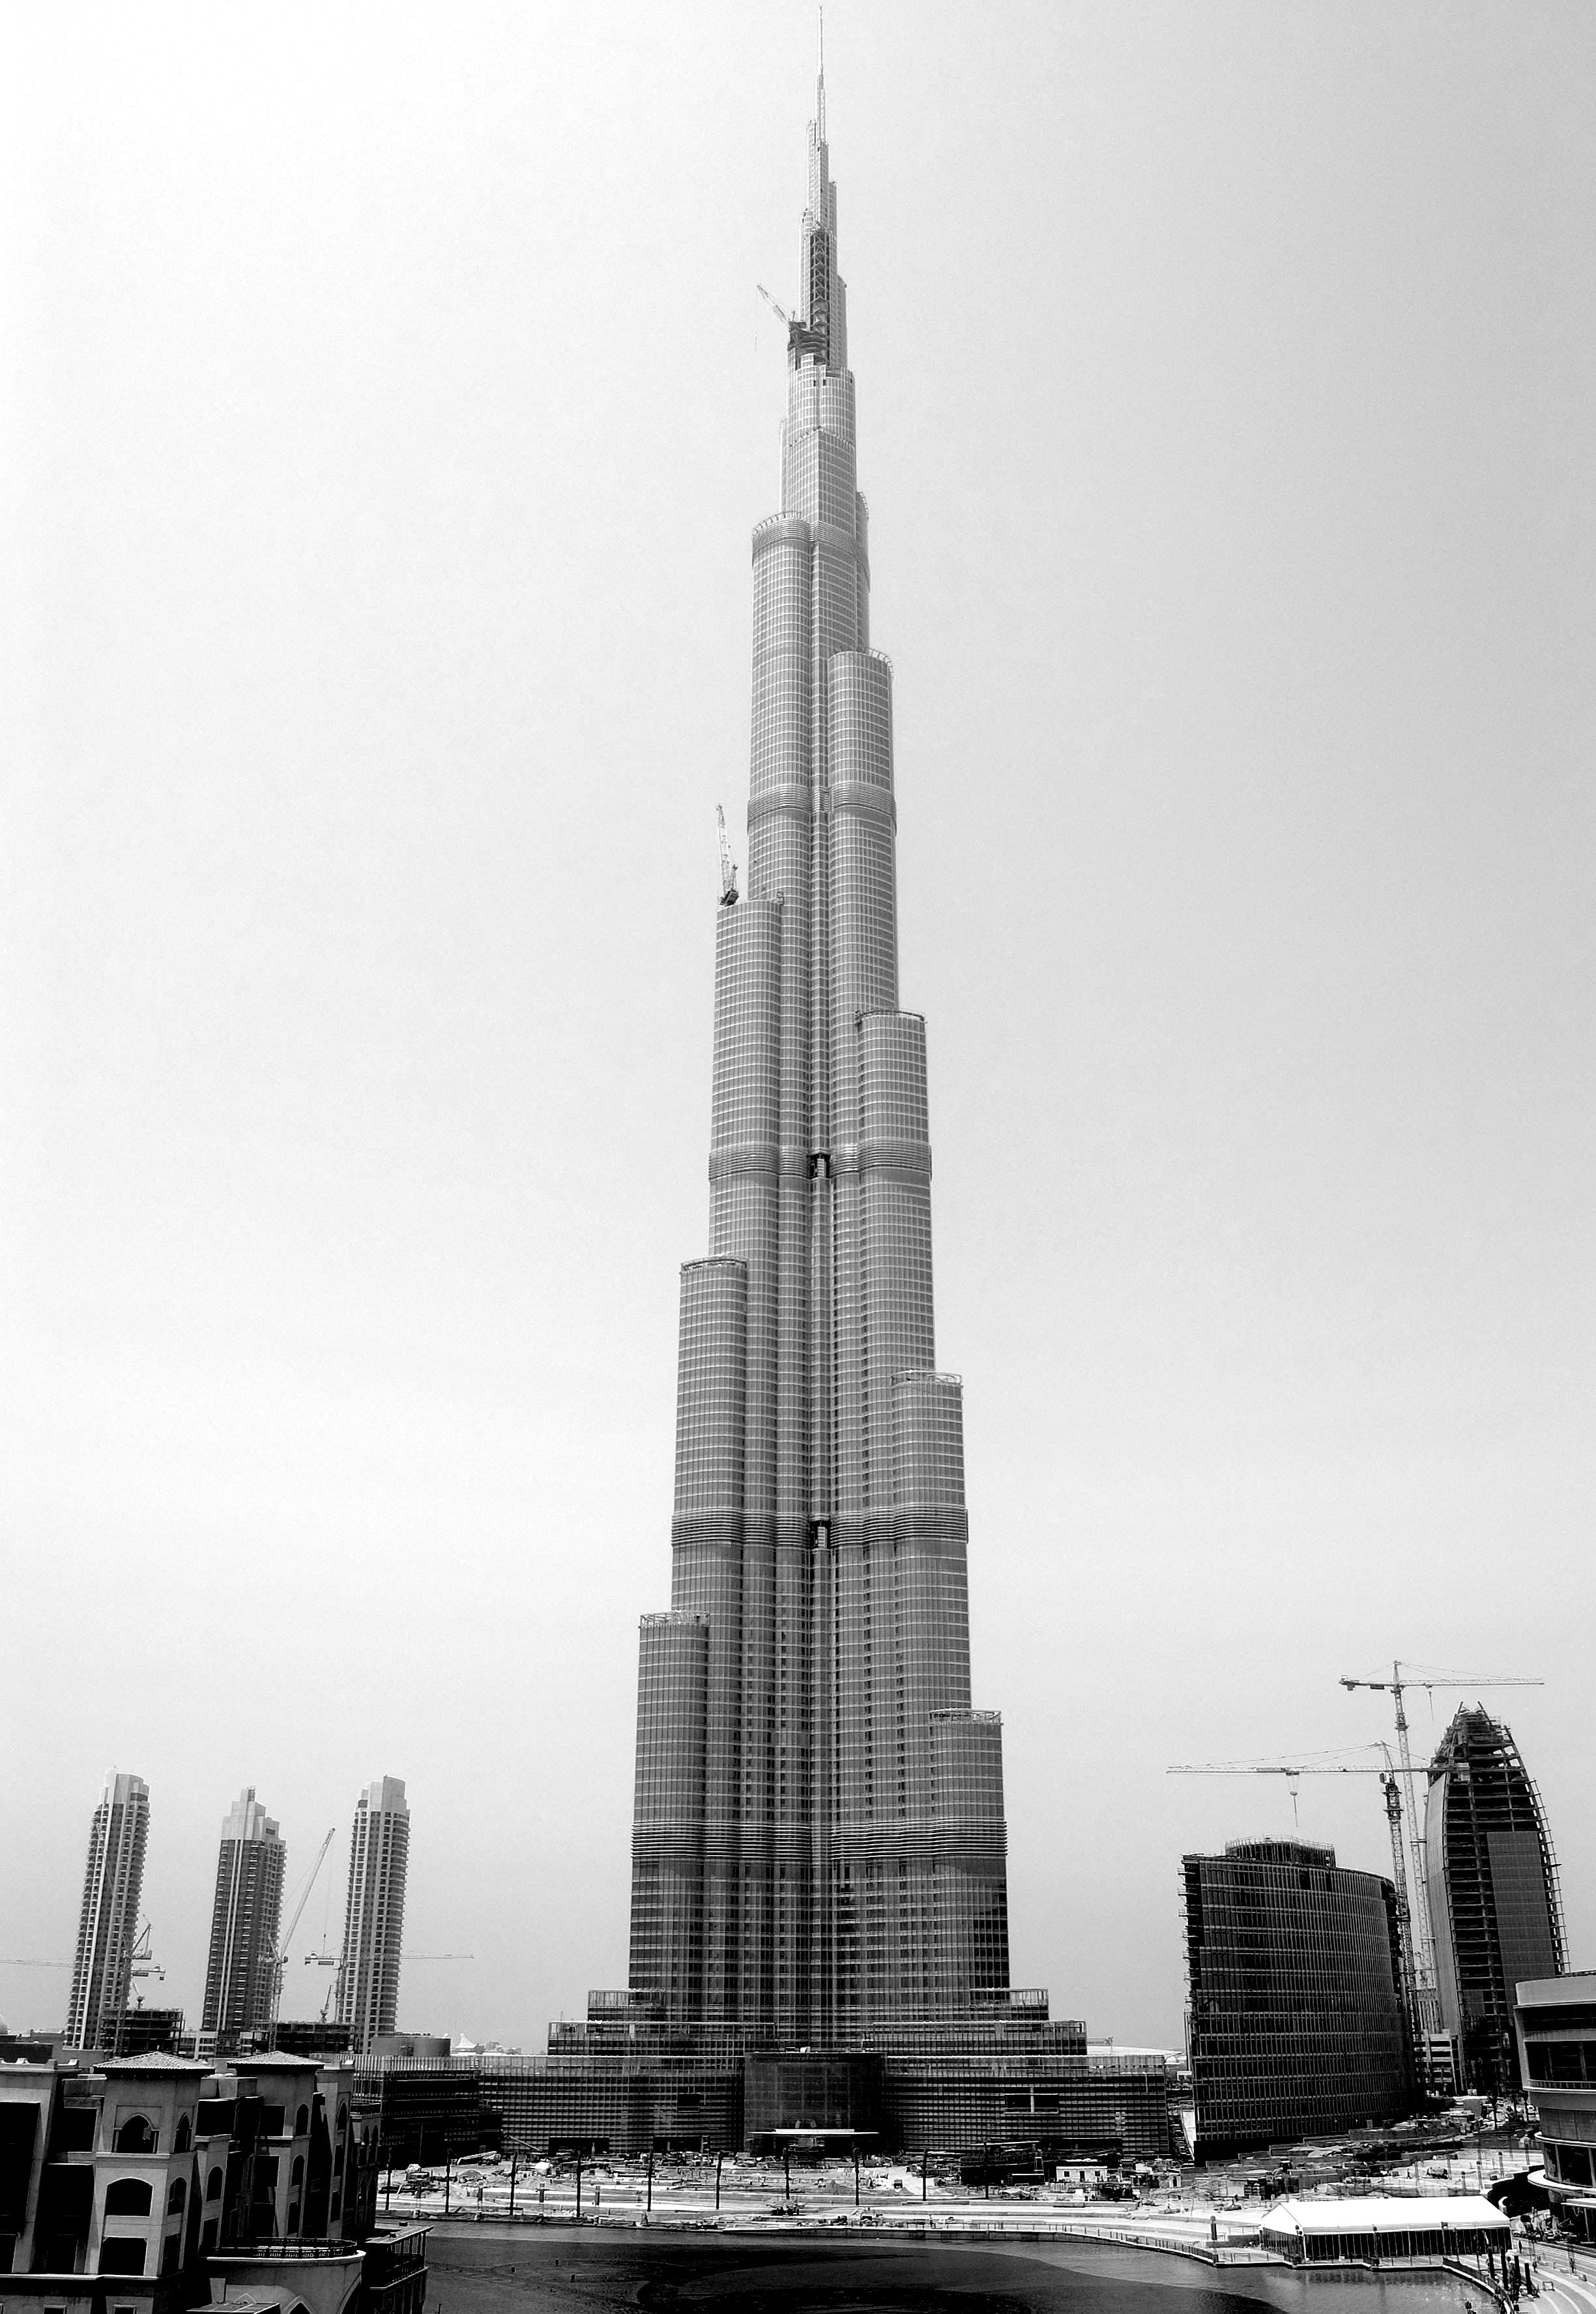 Burj Khalifa in Dubai is currently the world’s tallest building